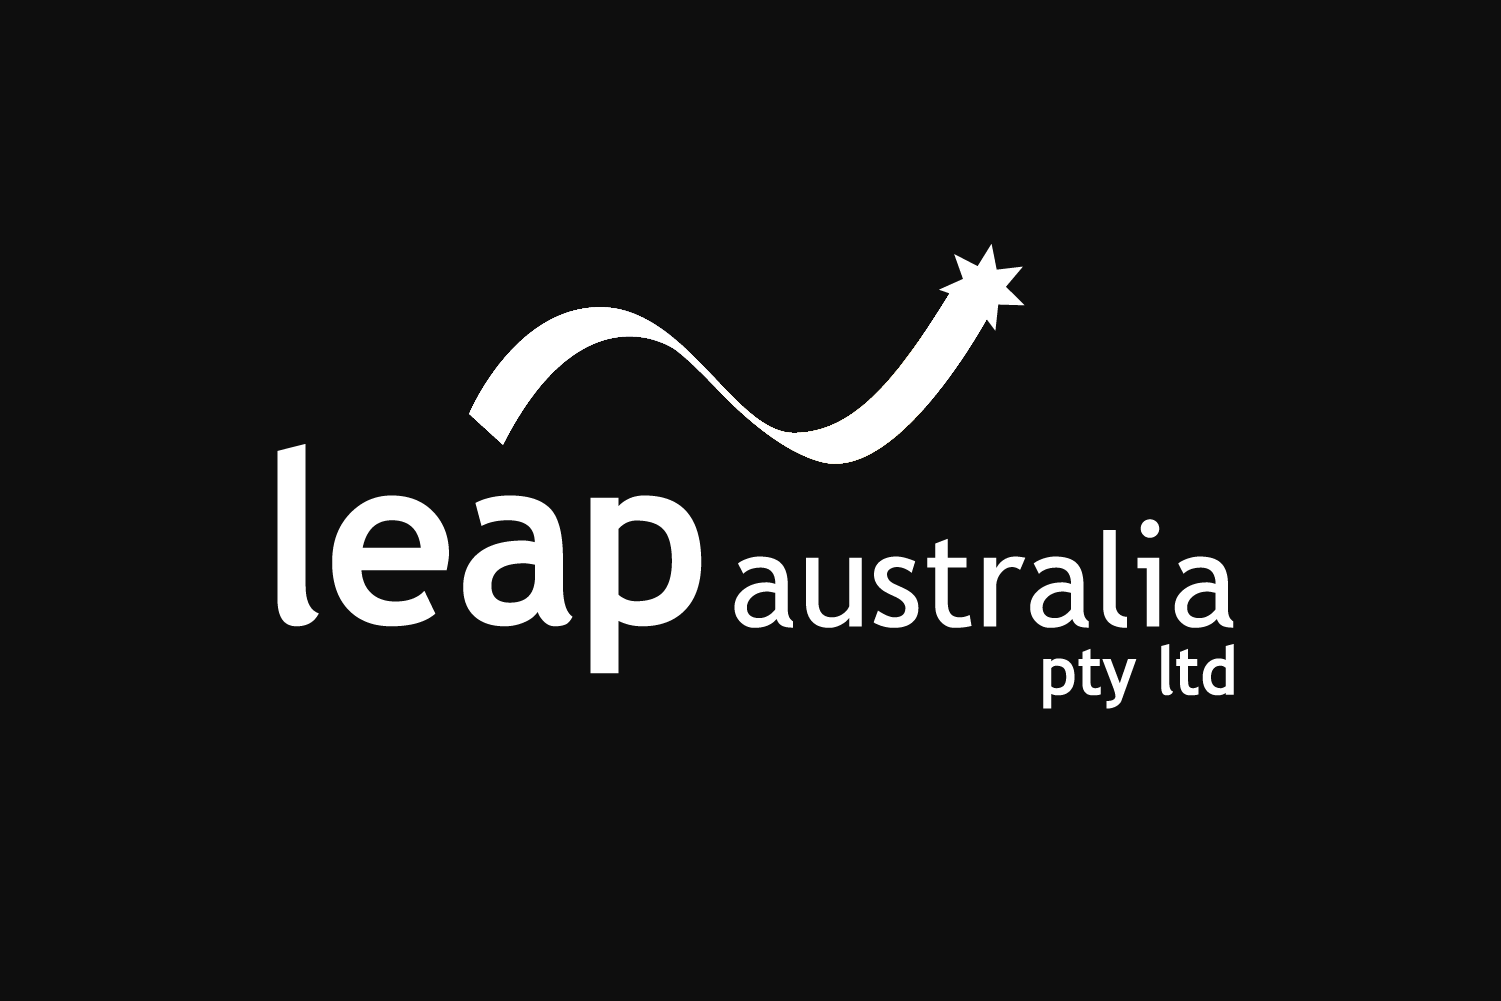 Leap Australia